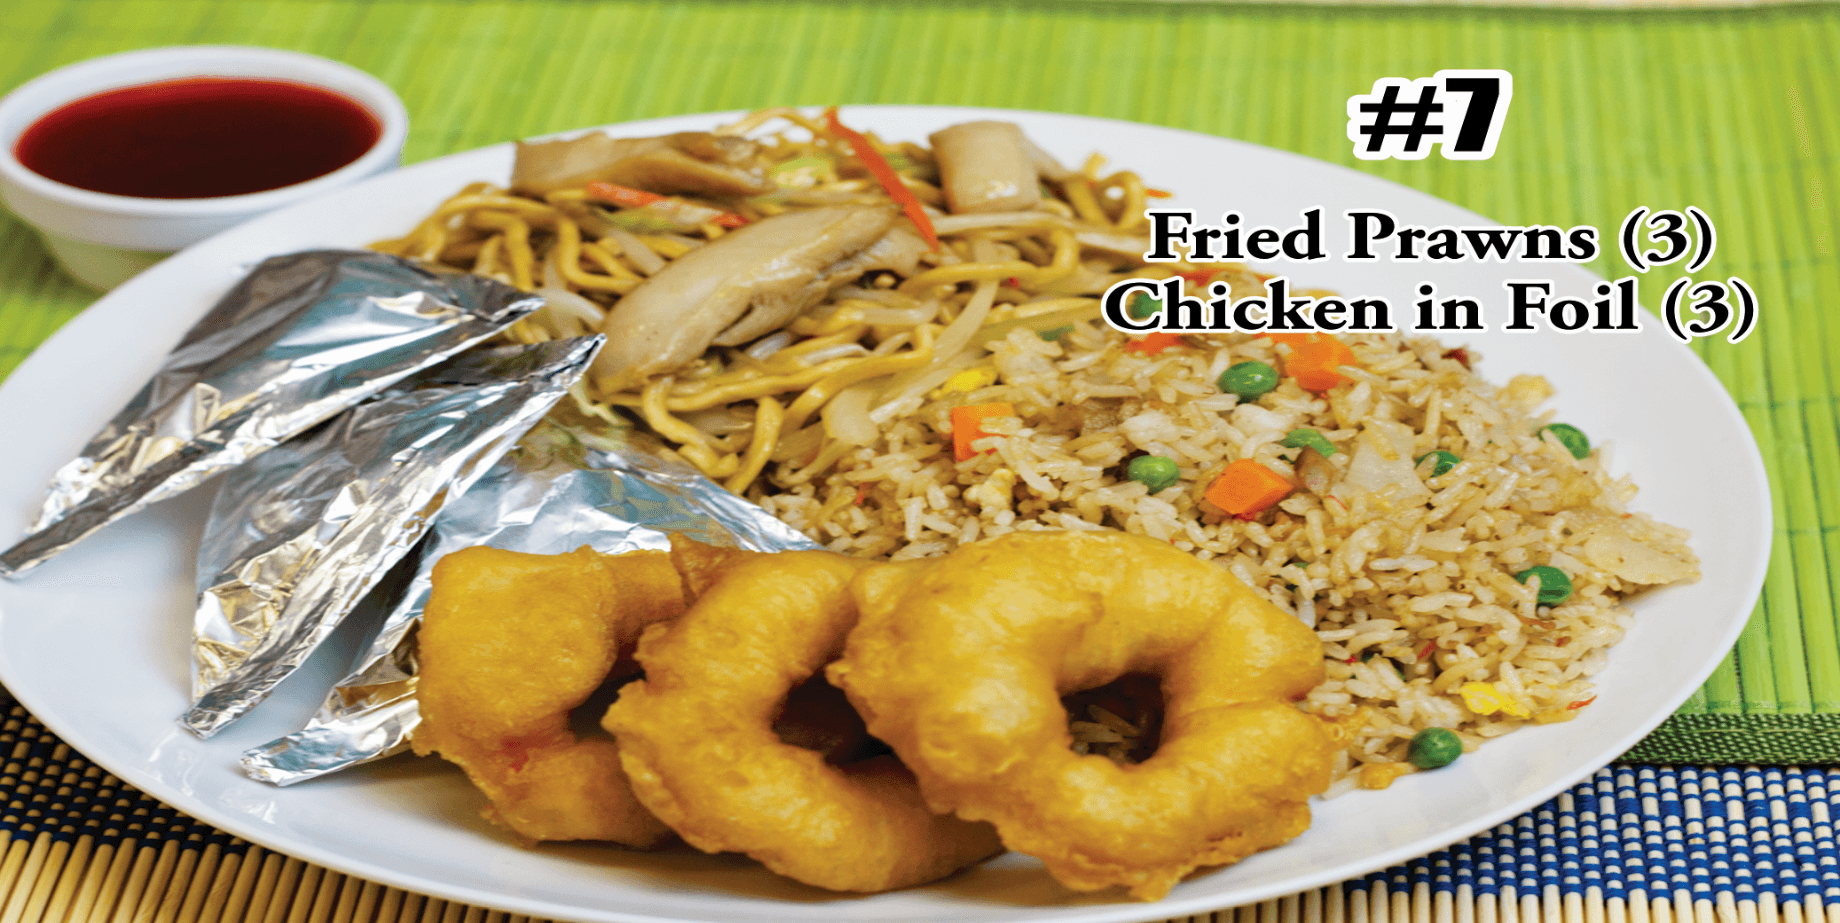 C16. Fried Prawns (3), Chicken in Foil (3) Combo